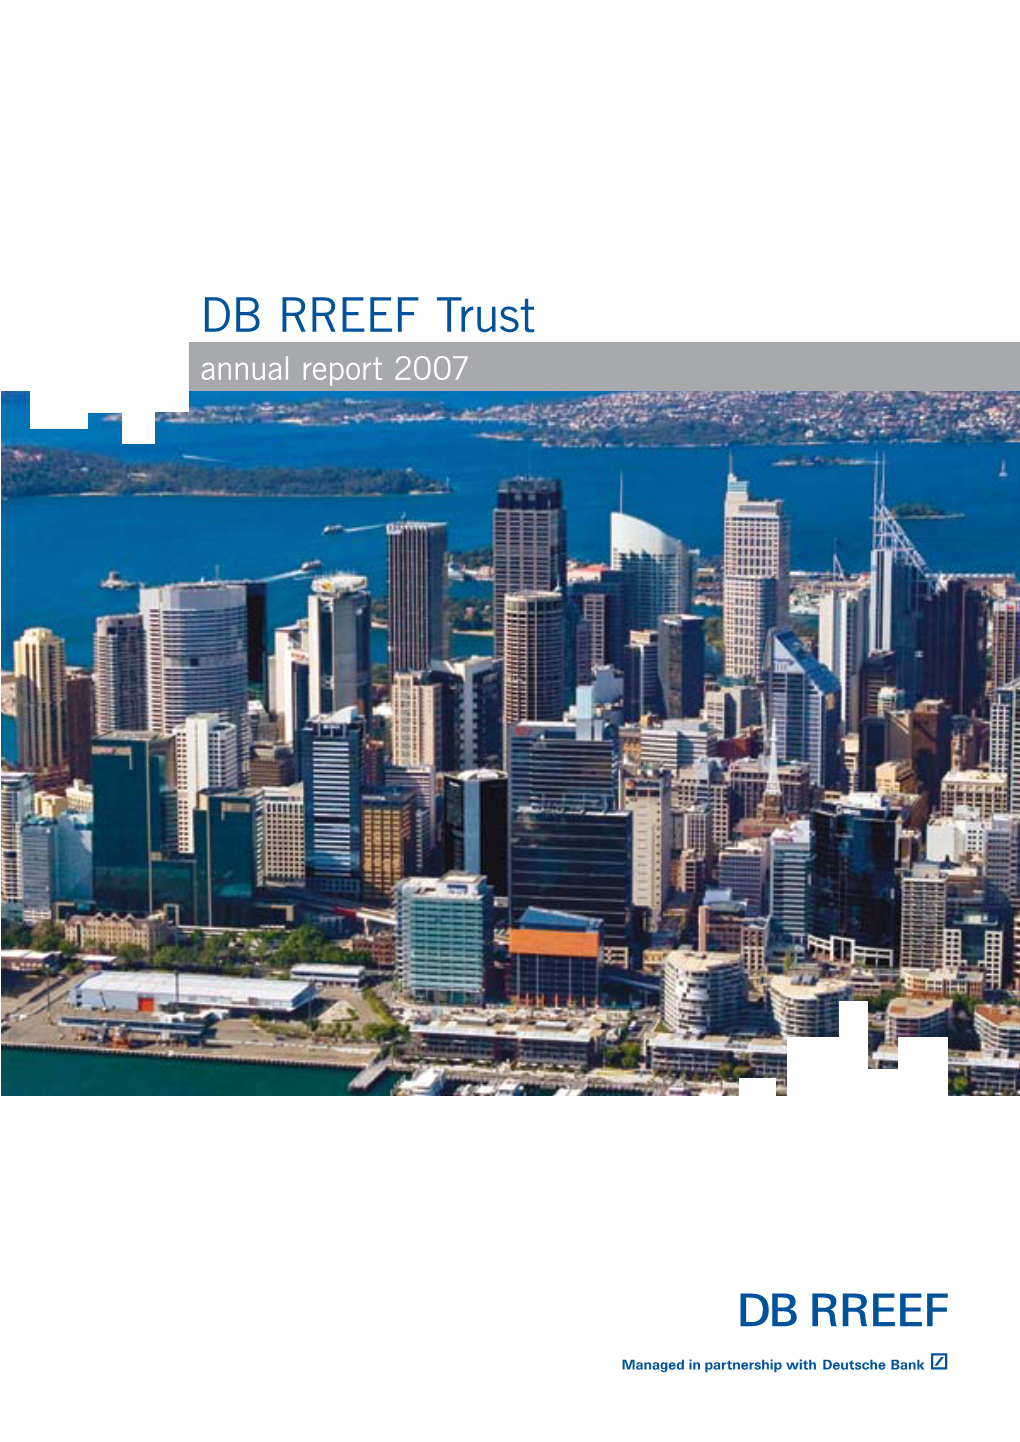 DB RREEF Trust Annual Report 2007 Contents